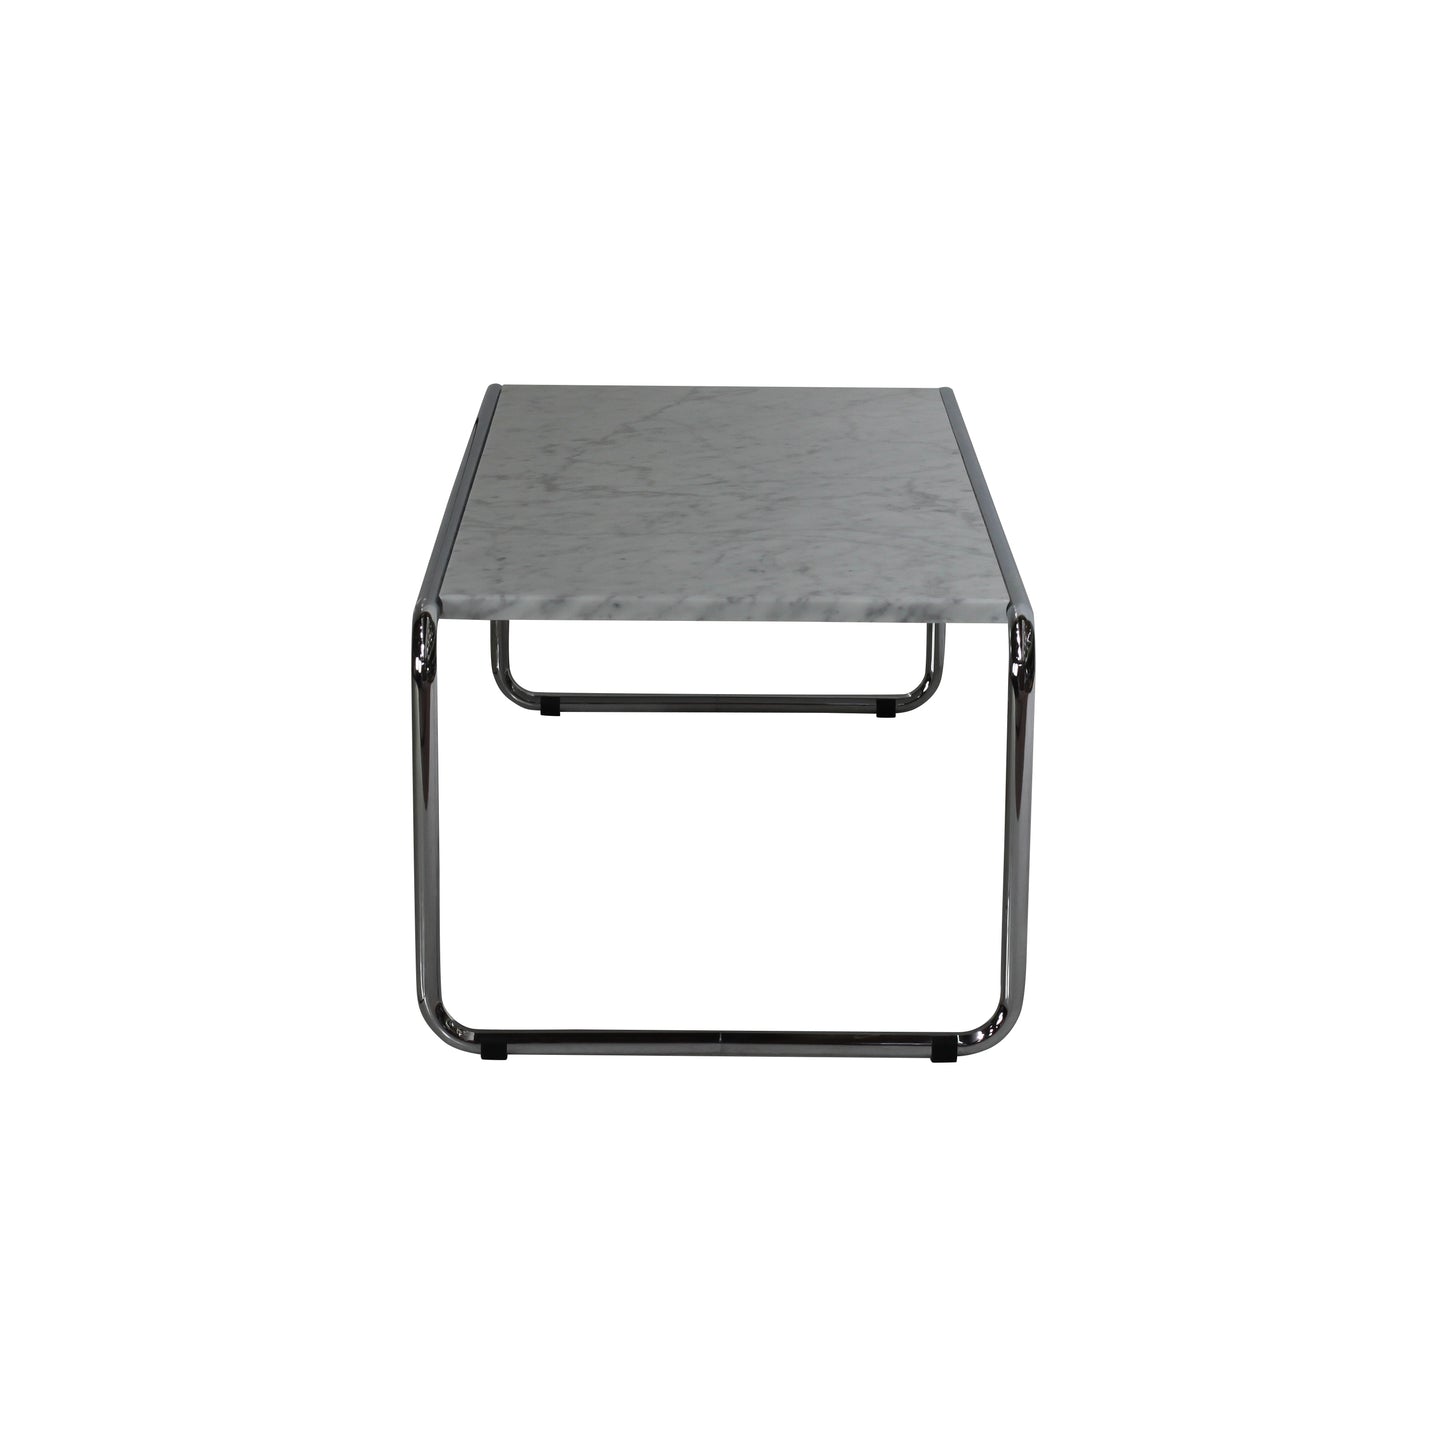 Laccio coffee table style | Carrara | Side